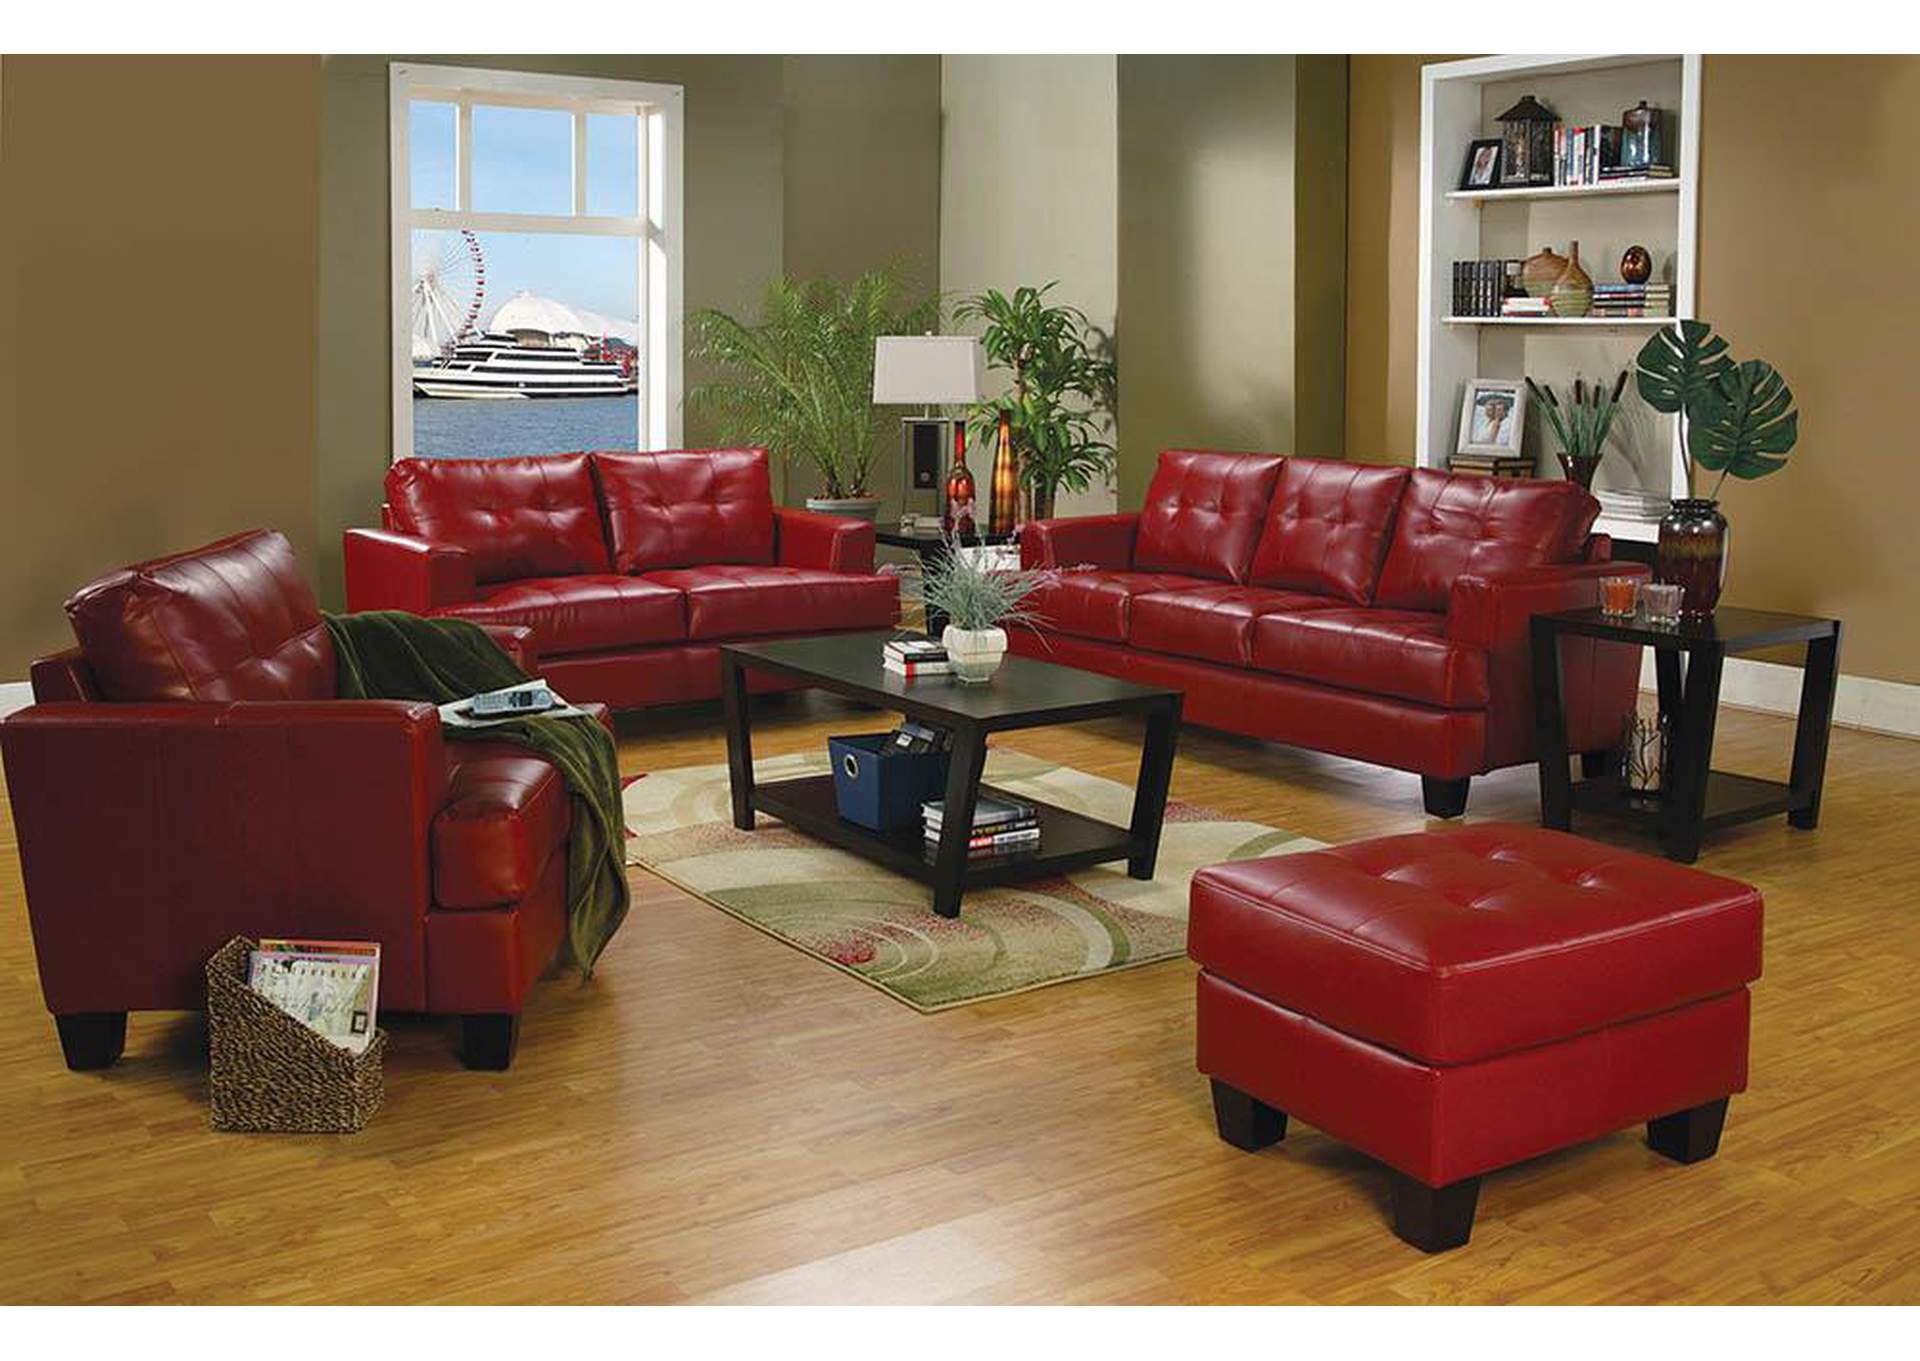 Samuel Red Bonded Leather Sofa,ABF Coaster Furniture